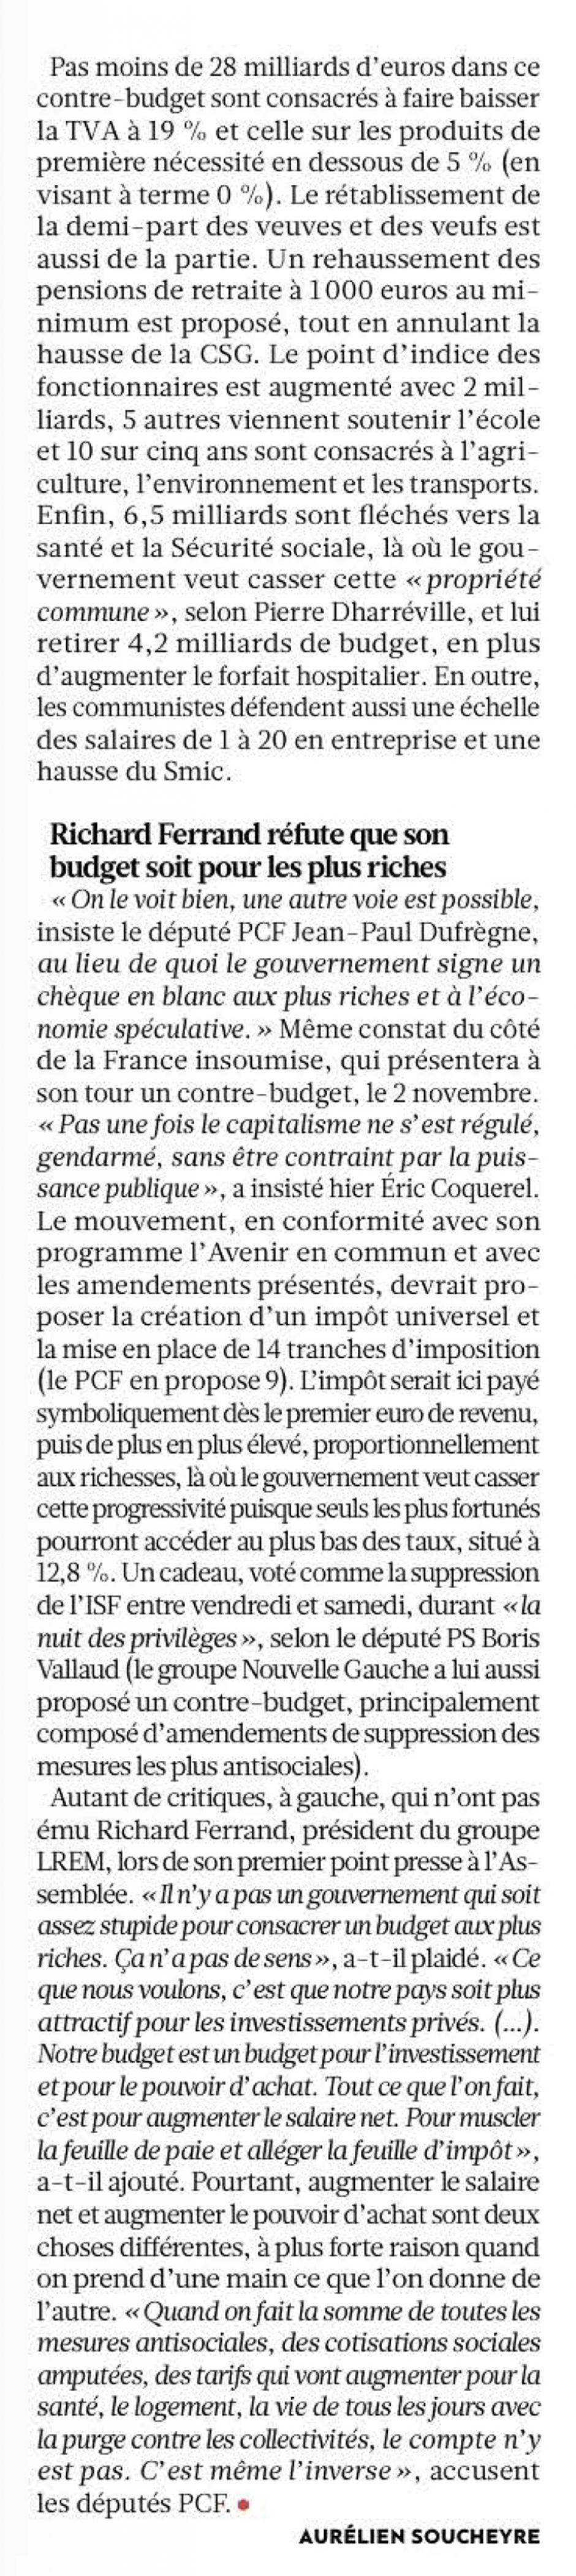 20171025-L'Huma-France-Budget : « l'Humain d'abord » contre « la finance d'abord »